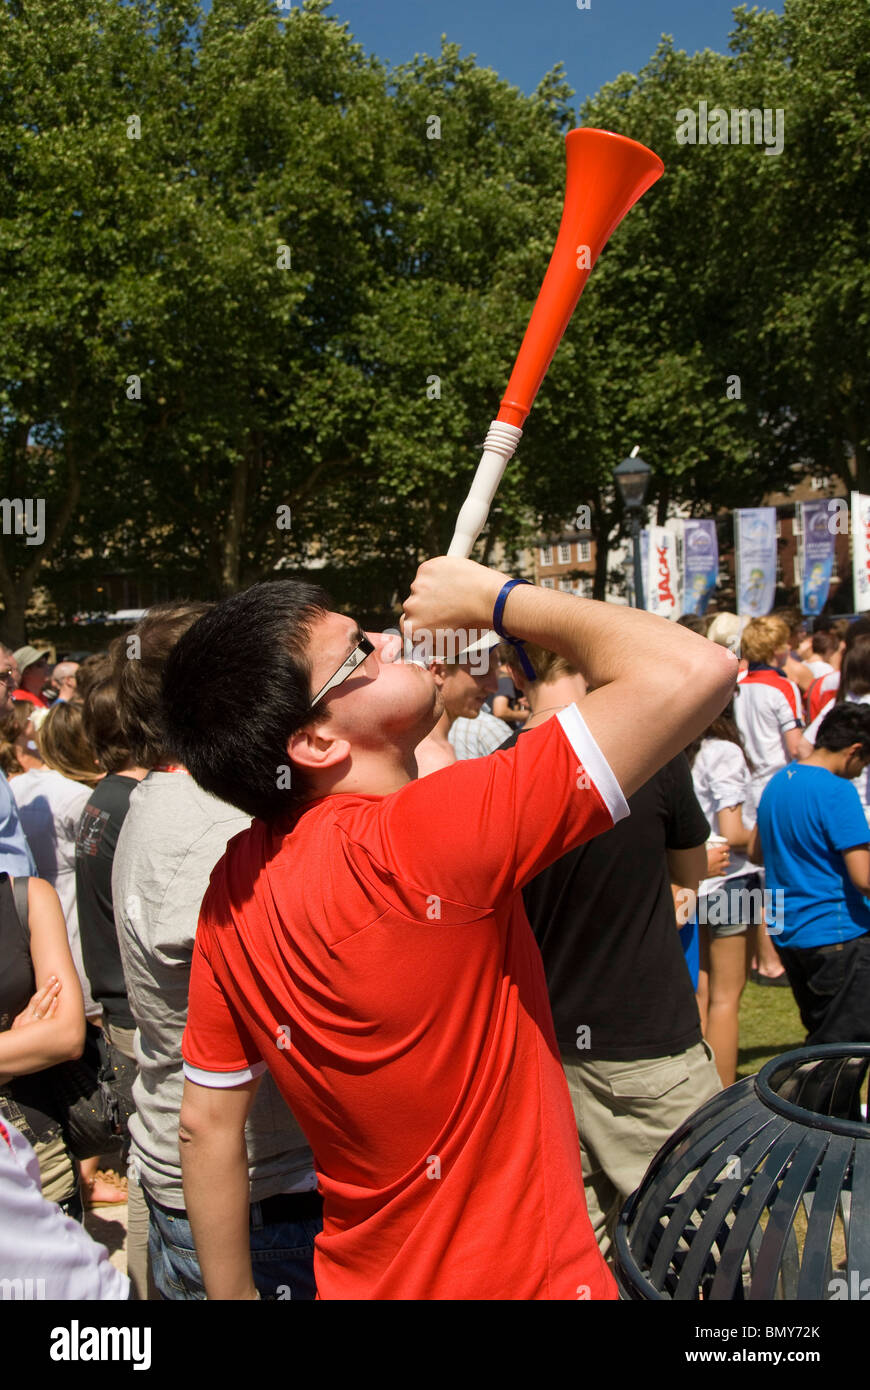 Fußball-Fan eine Vuvuzela bläst, während World Cup, England, UK Stockfoto